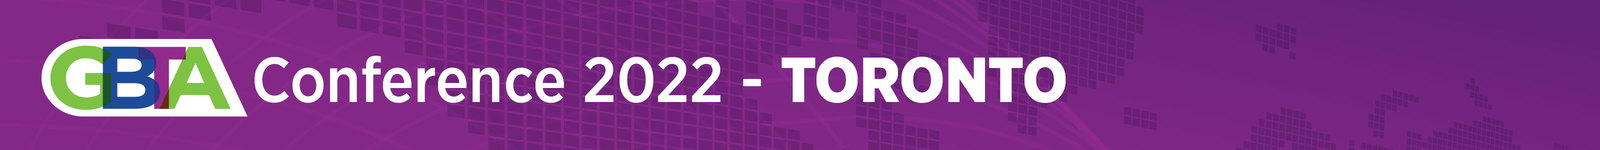 GBTA Conference 2022 - Toronto logo